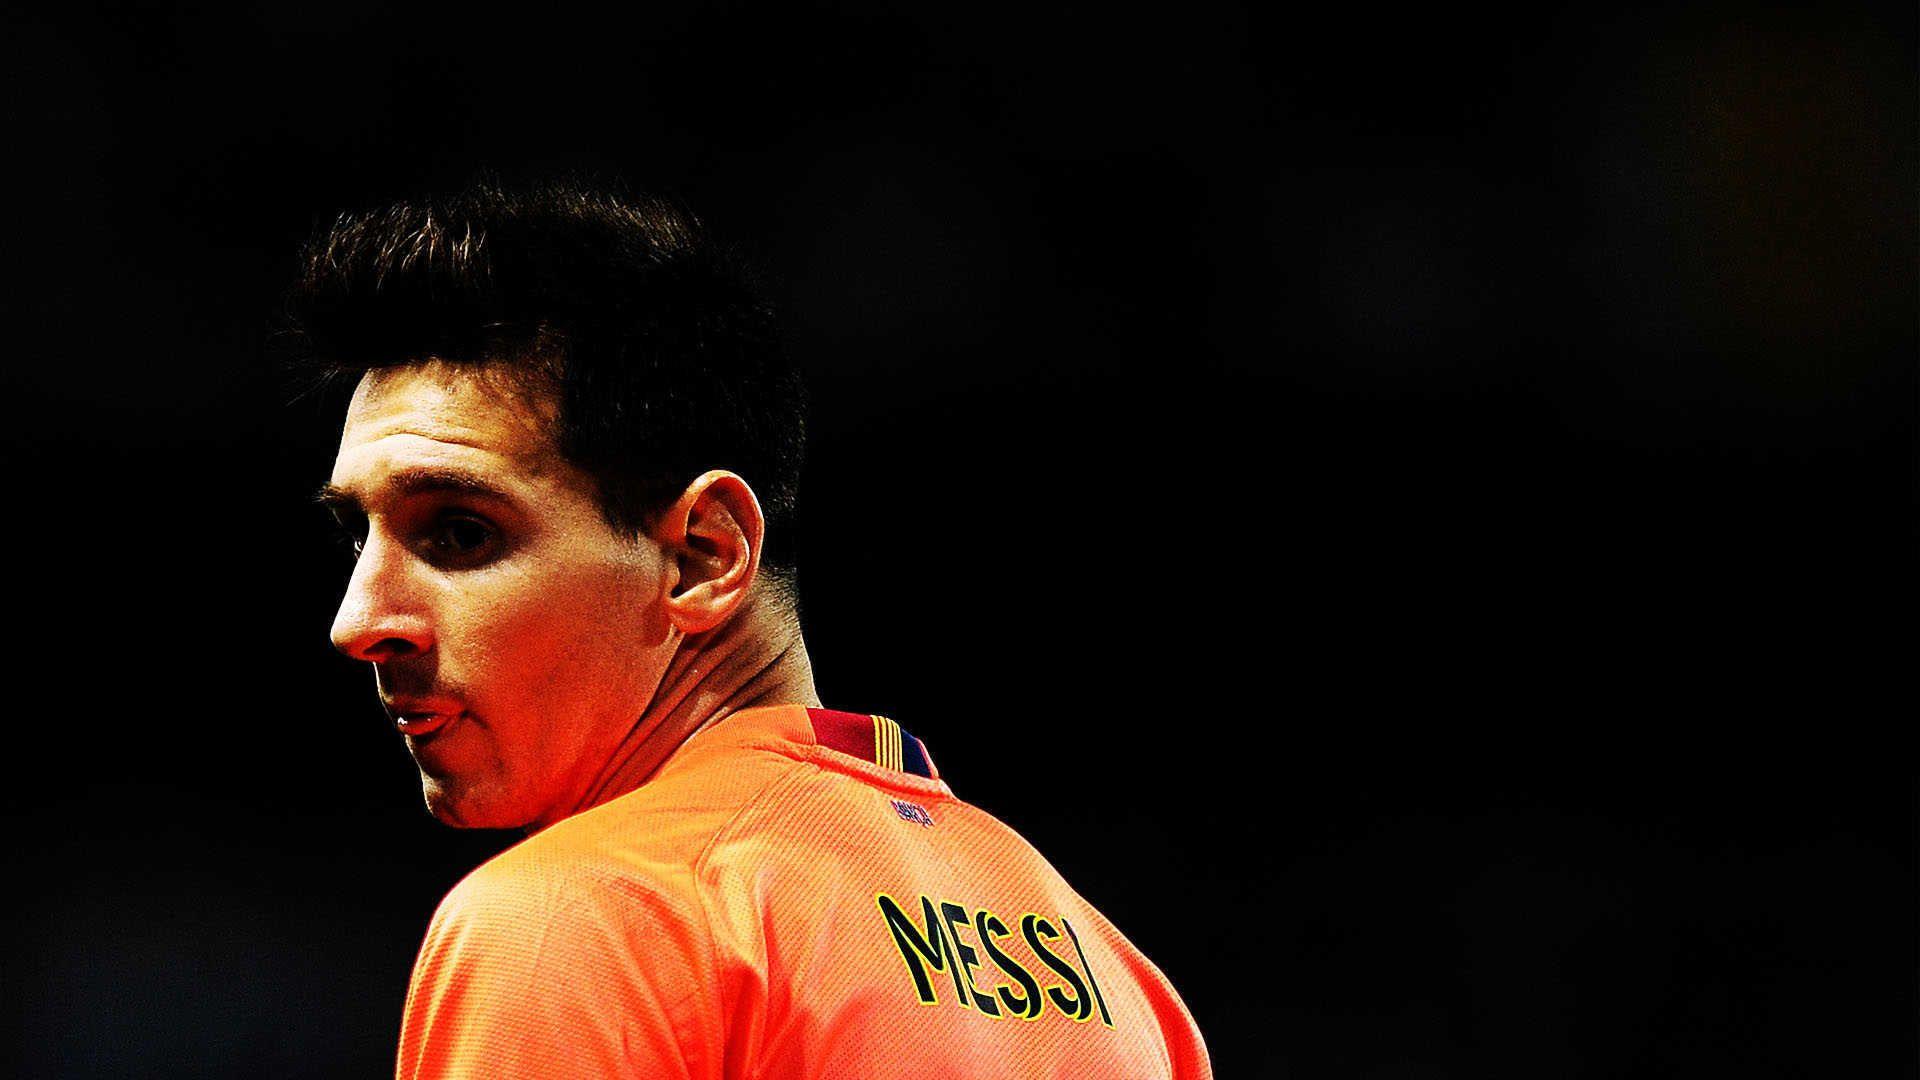 Lionel Messi HD wallpaper free download. HD Wallpaper